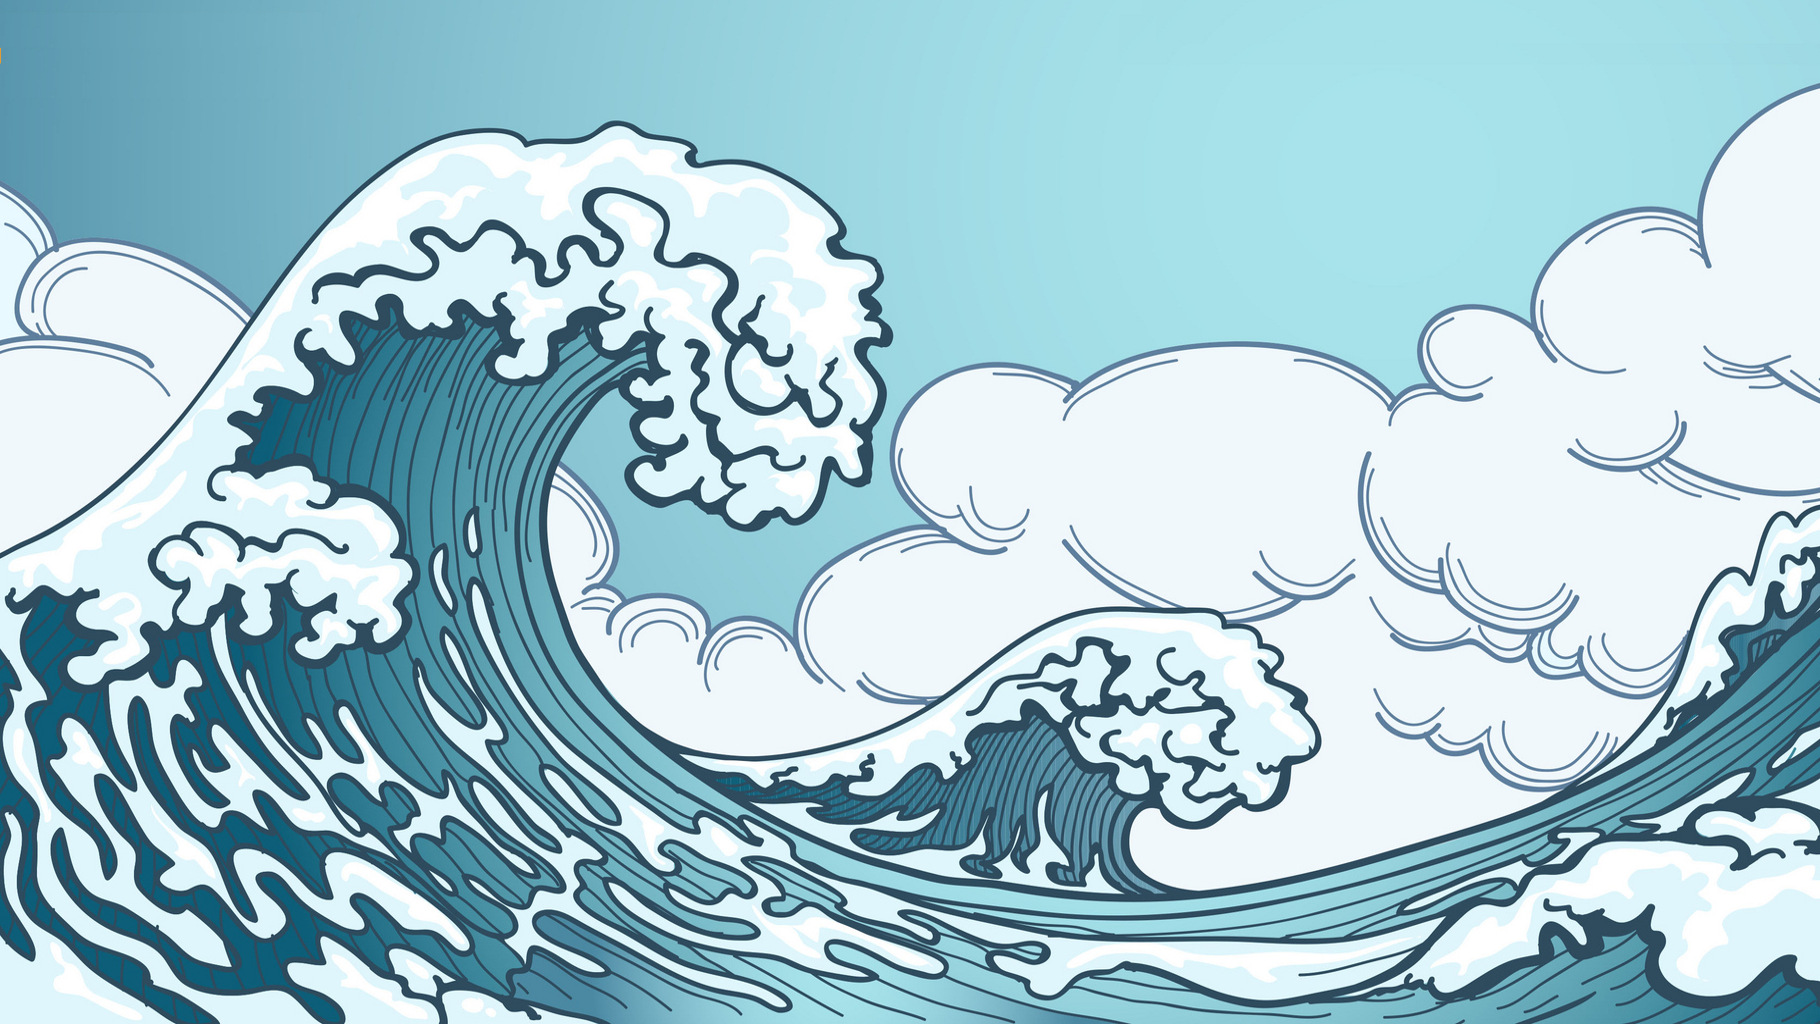 sea storm similar to Hokusai's The Great Wave